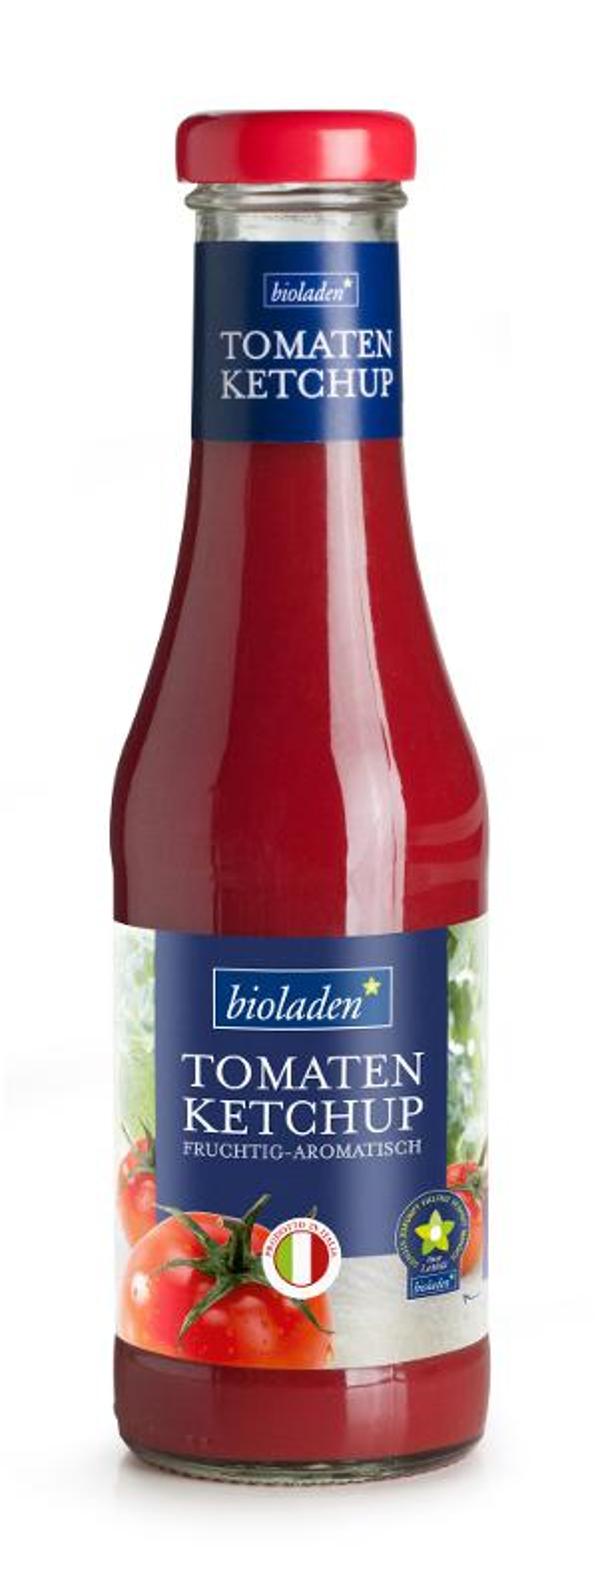 Produktfoto zu Tomaten Ketchup 450ml